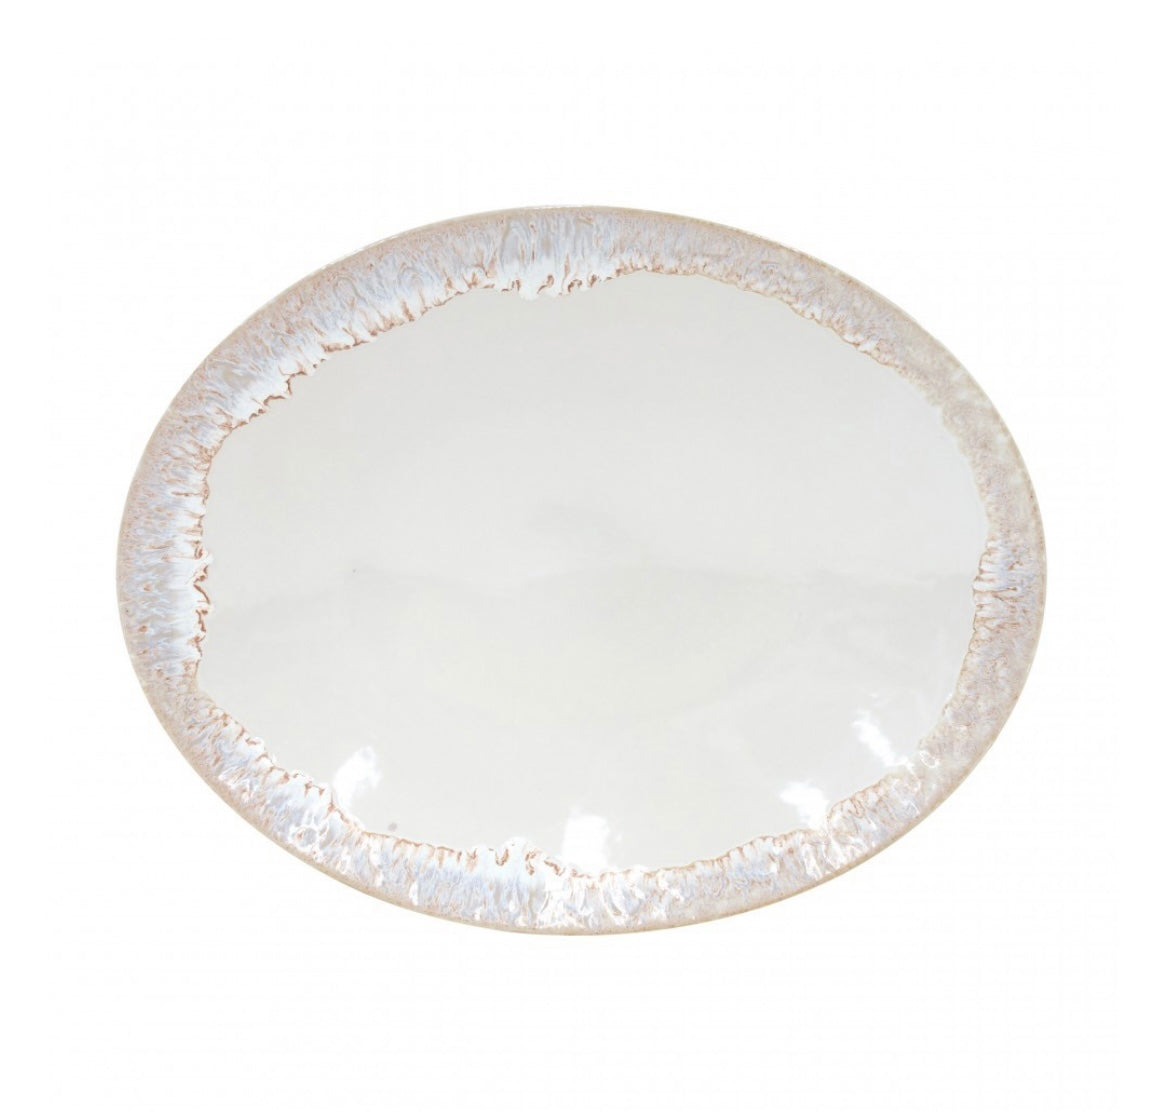 Casafina Oval Platter - Taormina White